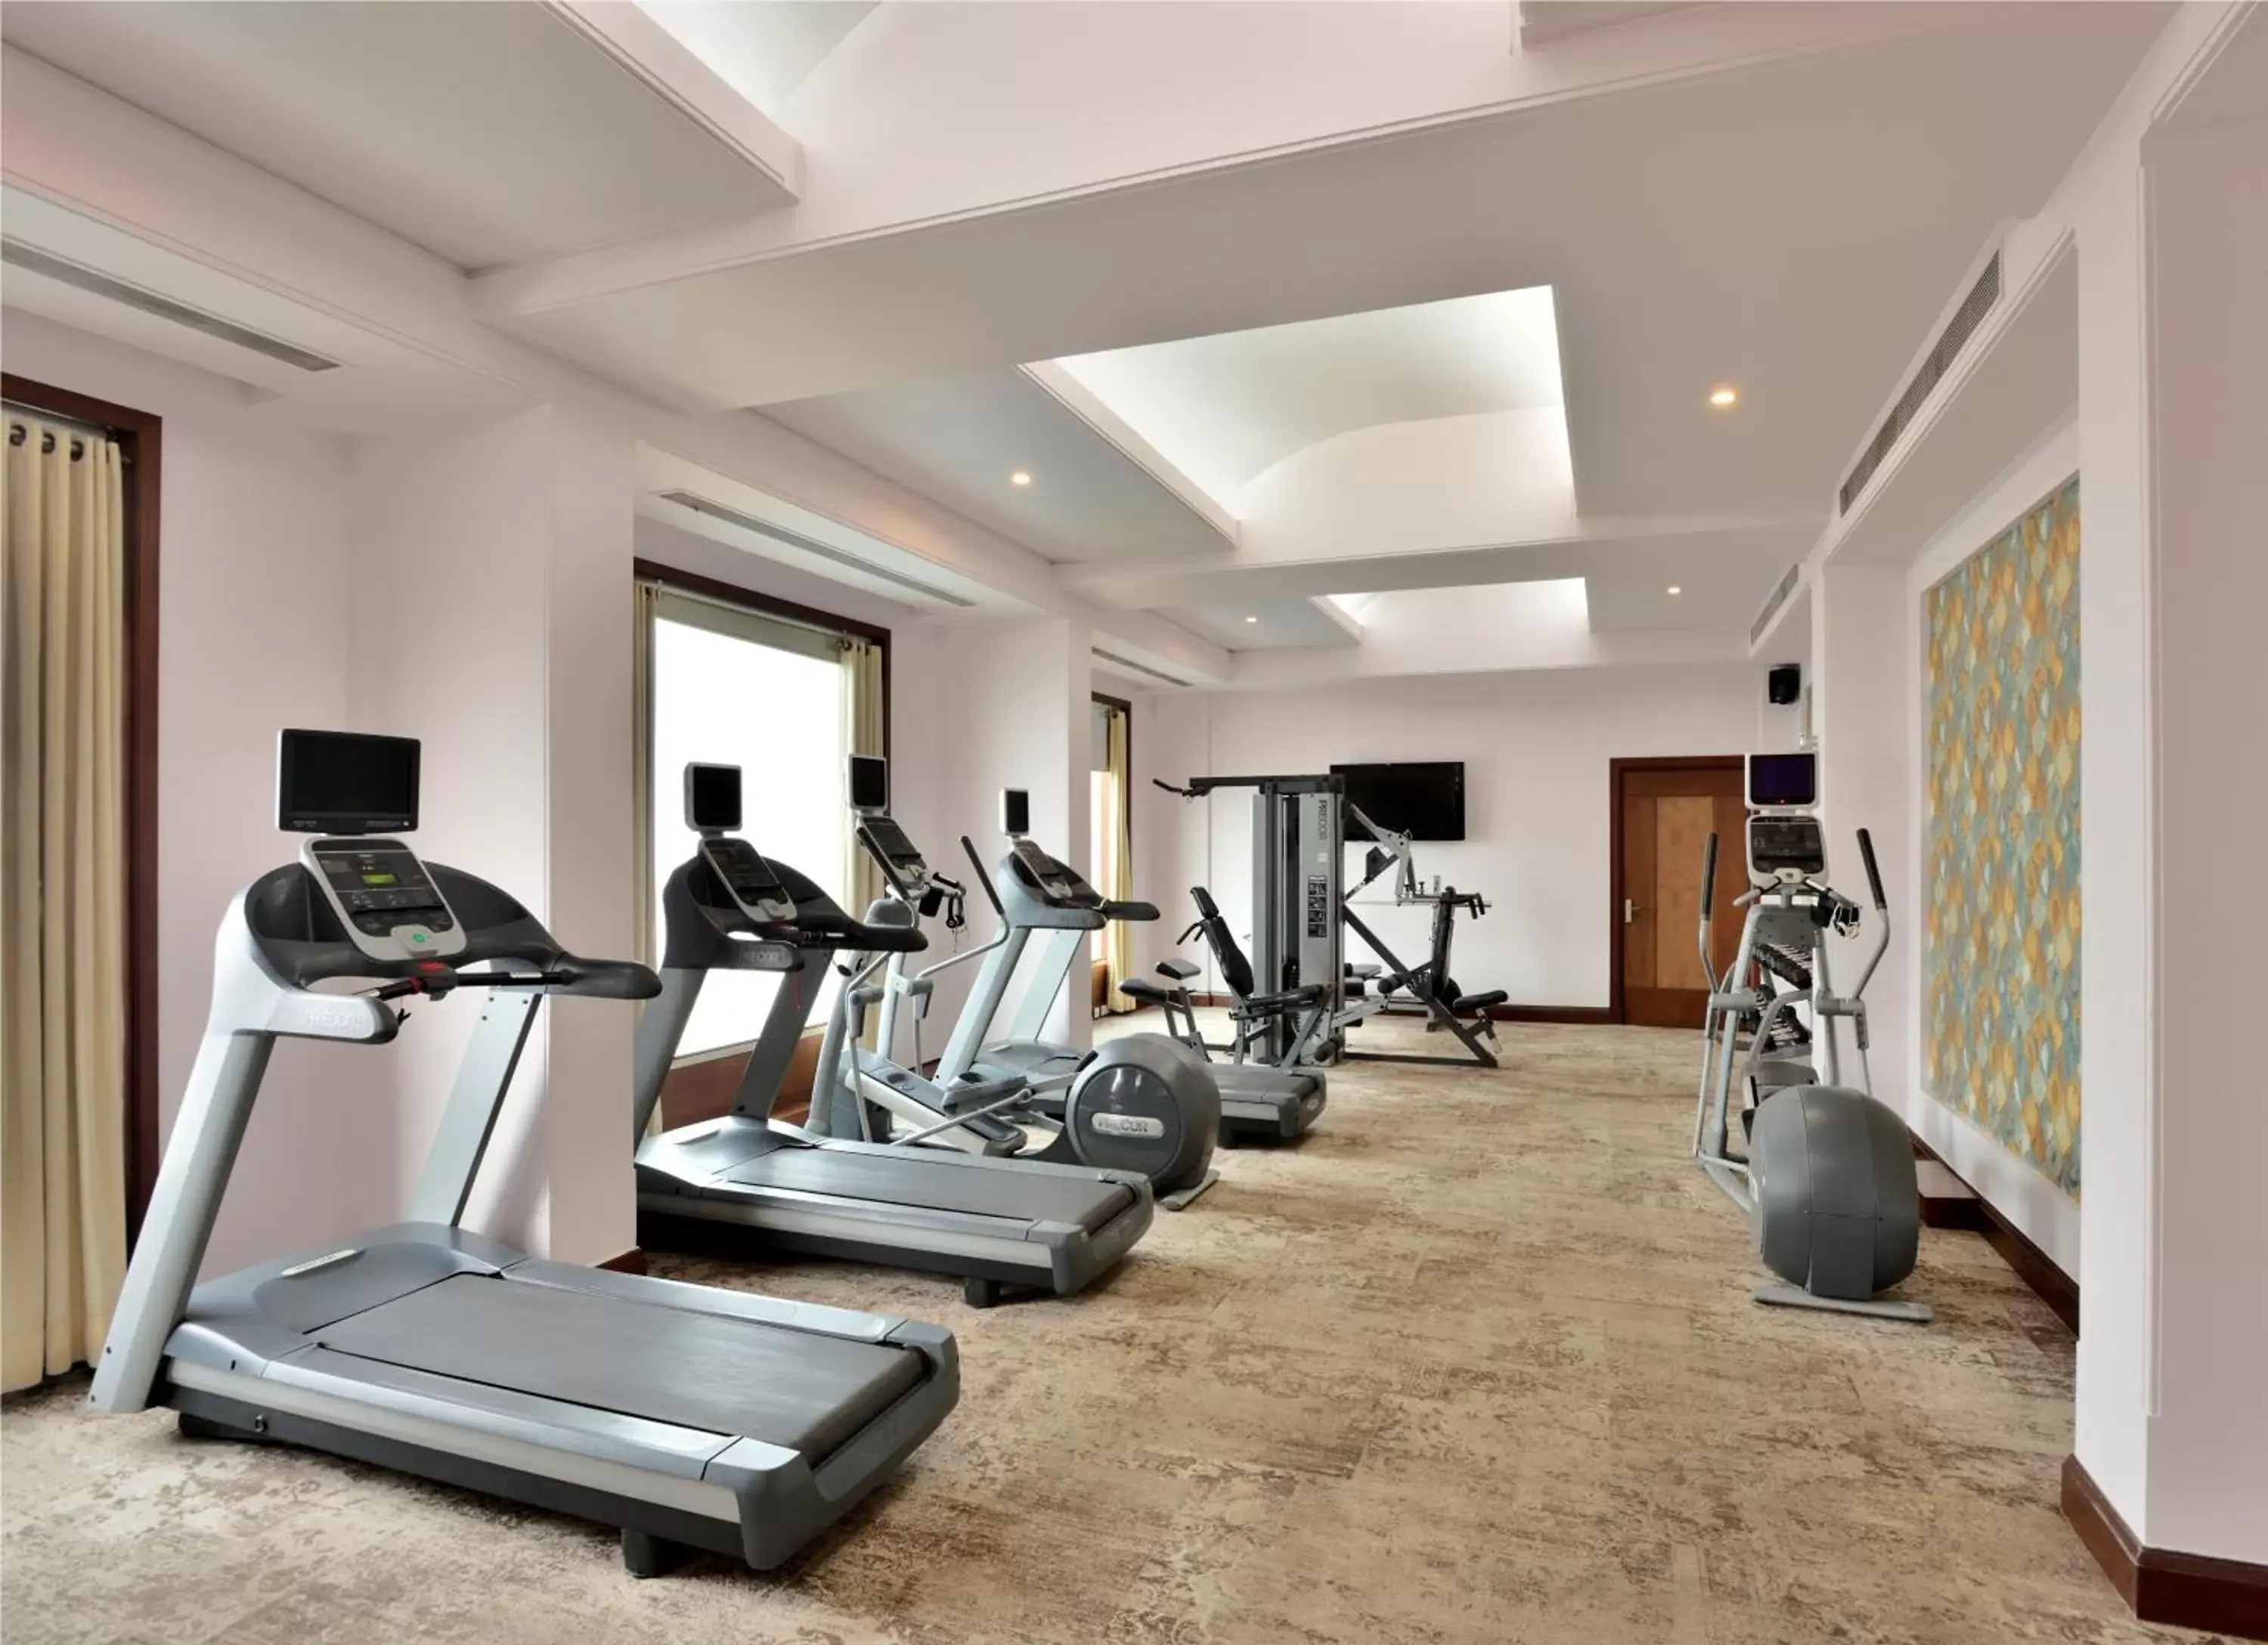 Fitness centre/facilities, Fitness Center/Facilities in Radisson Noida